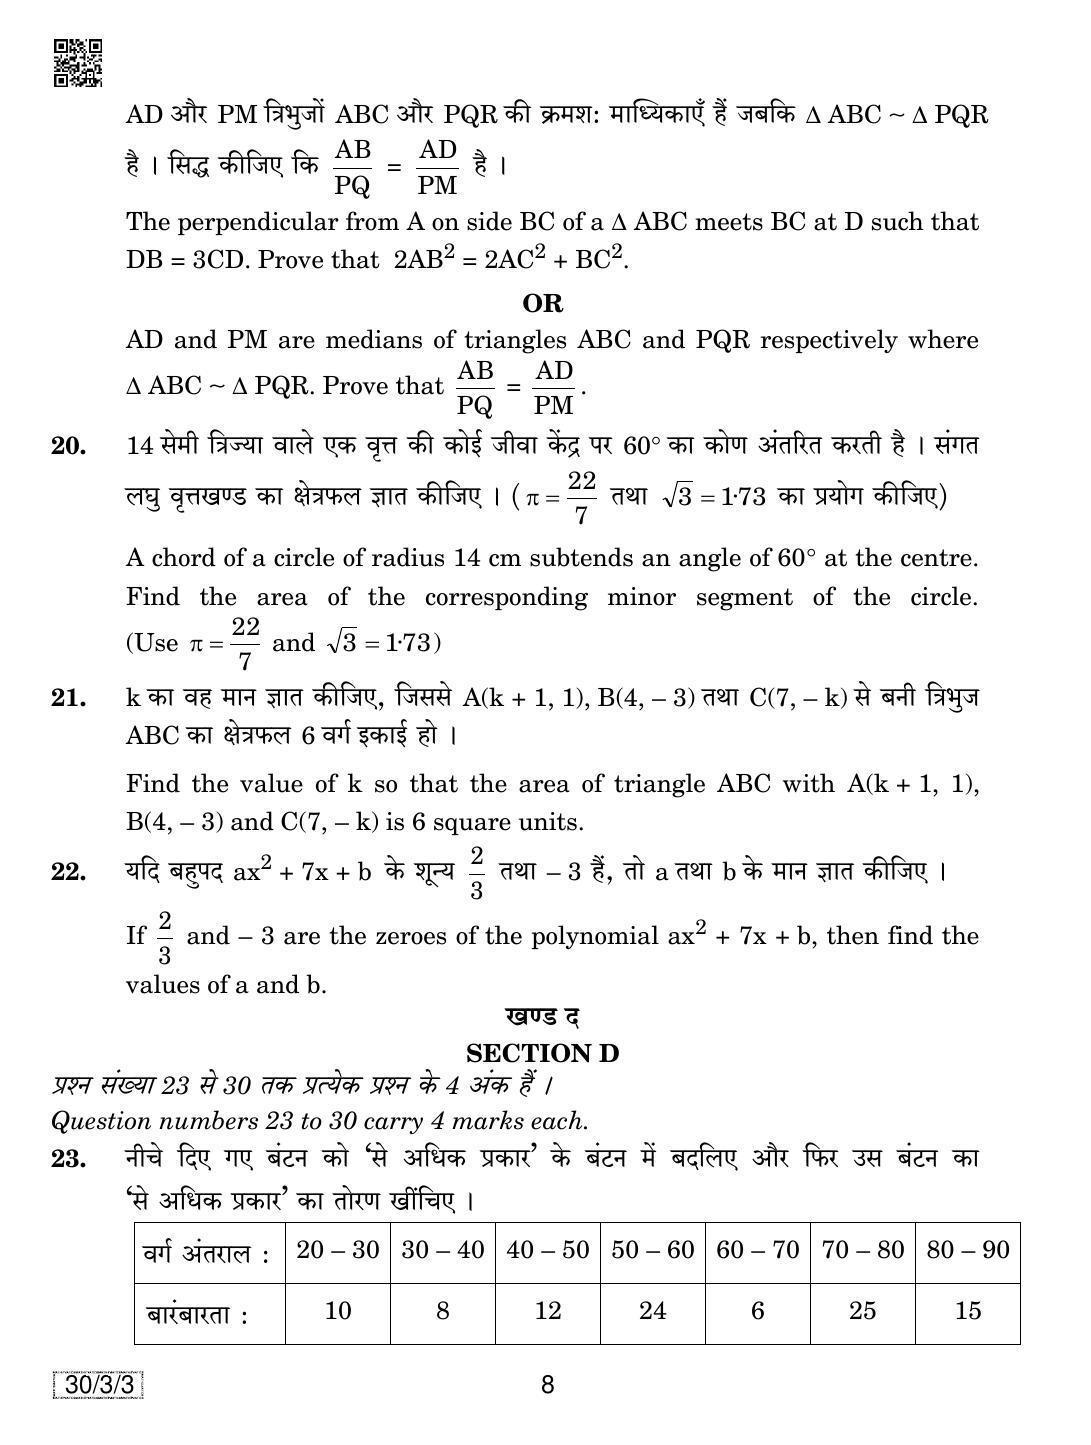 CBSE Class 10 Maths (30/3/3 - SET 3) 2019 Question Paper - Page 8